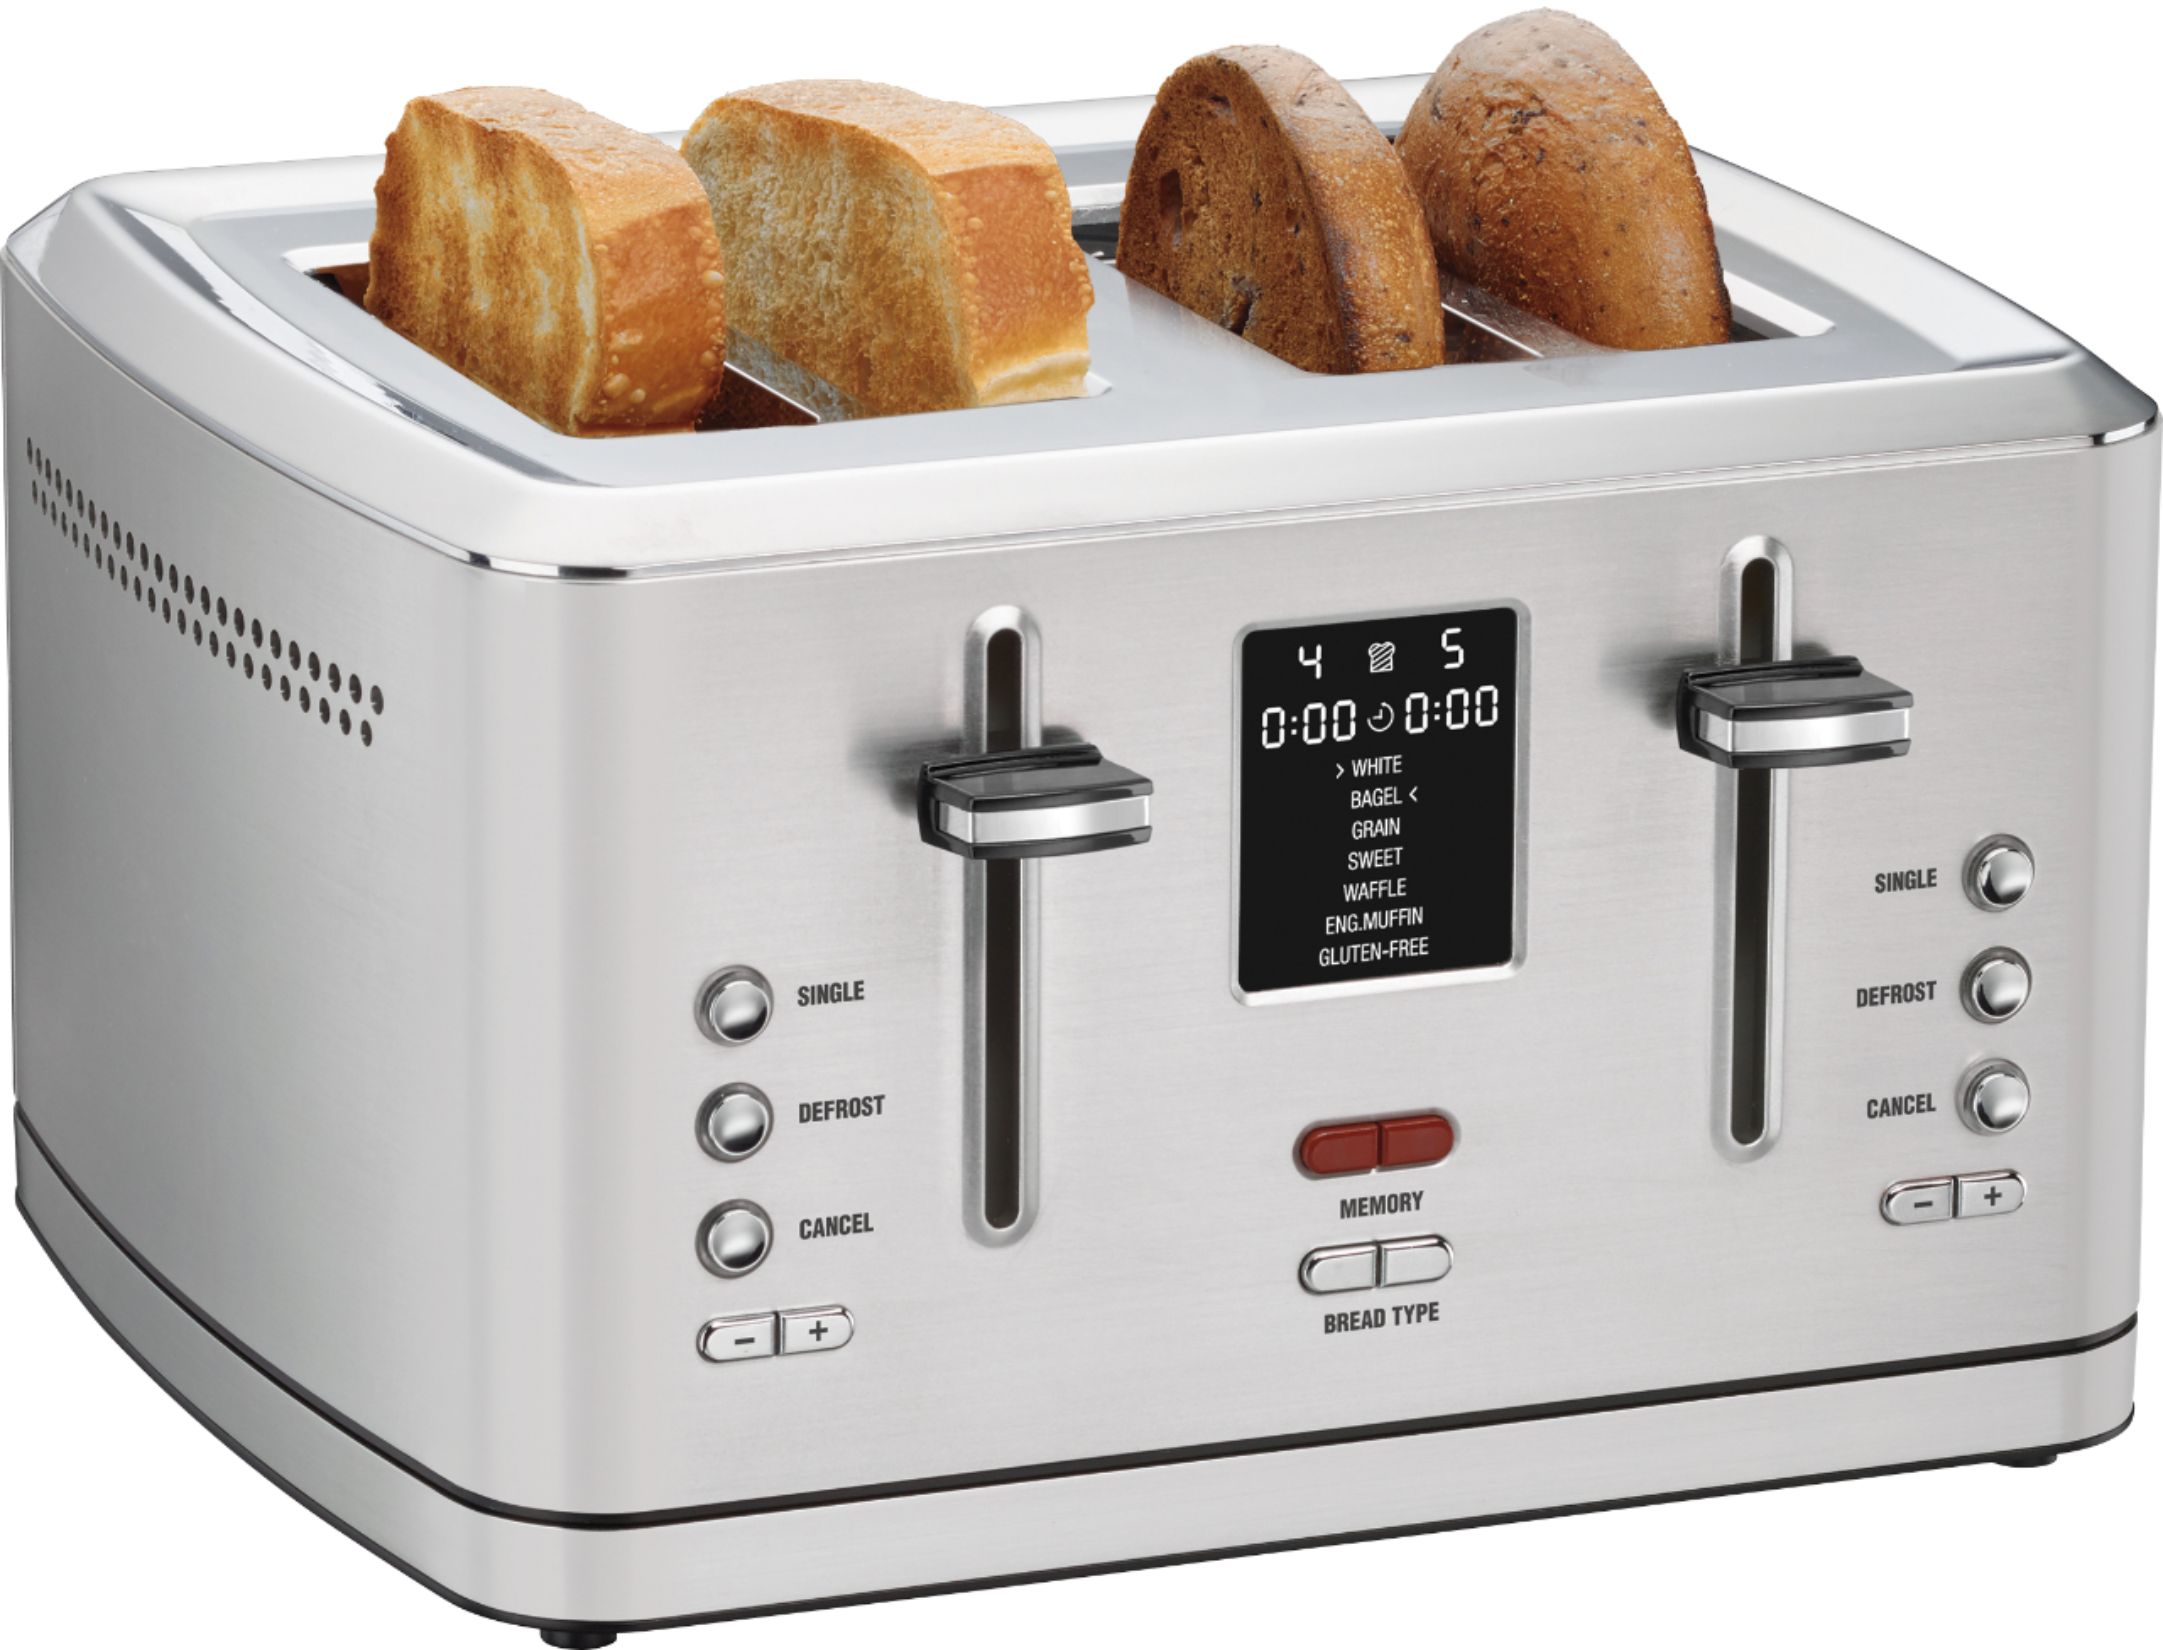 Galaxy MDT4 Standard-Duty 4-Slice Commercial Toaster - 1 1/2 Slots, 120V